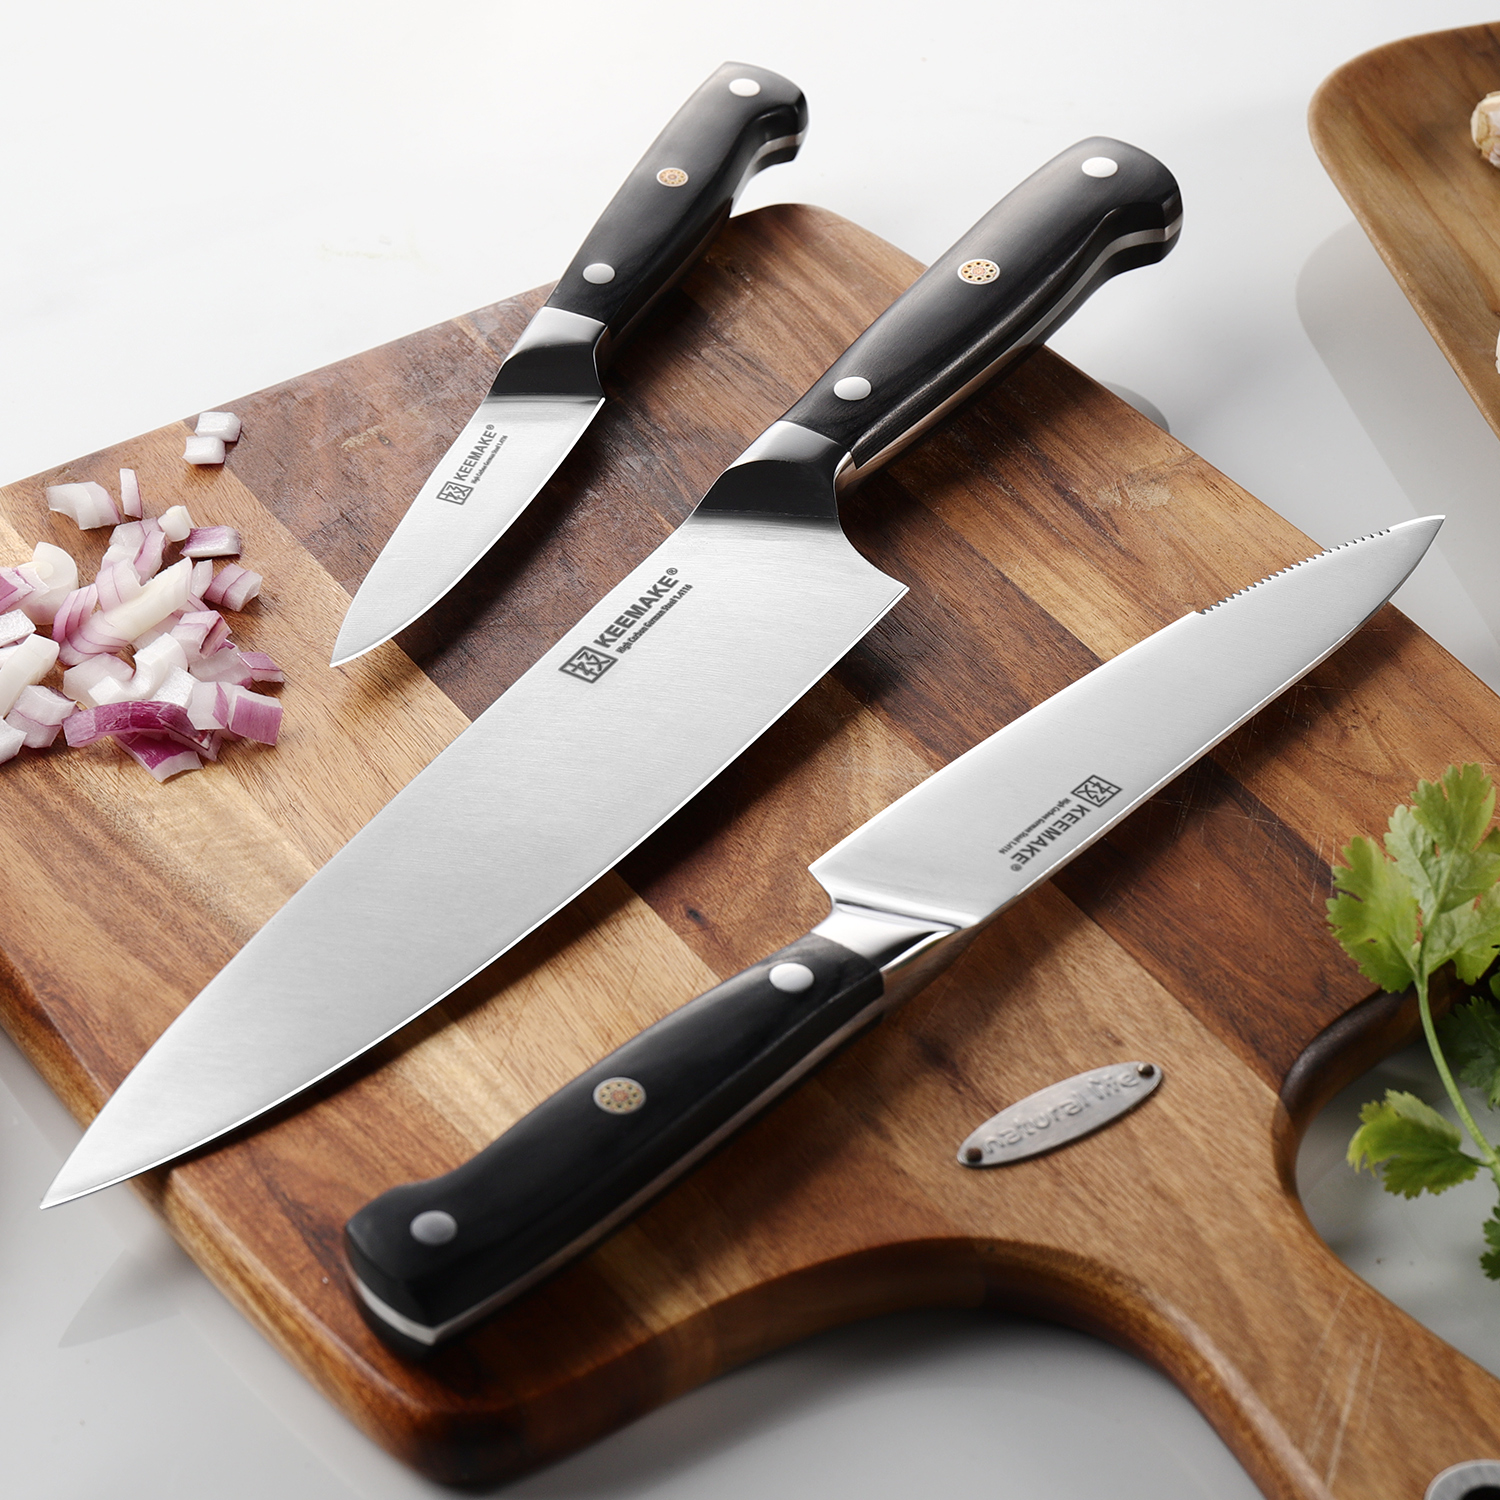 KEEMAKE-3pcs Kitchen Knife Set With Blue Gift Box